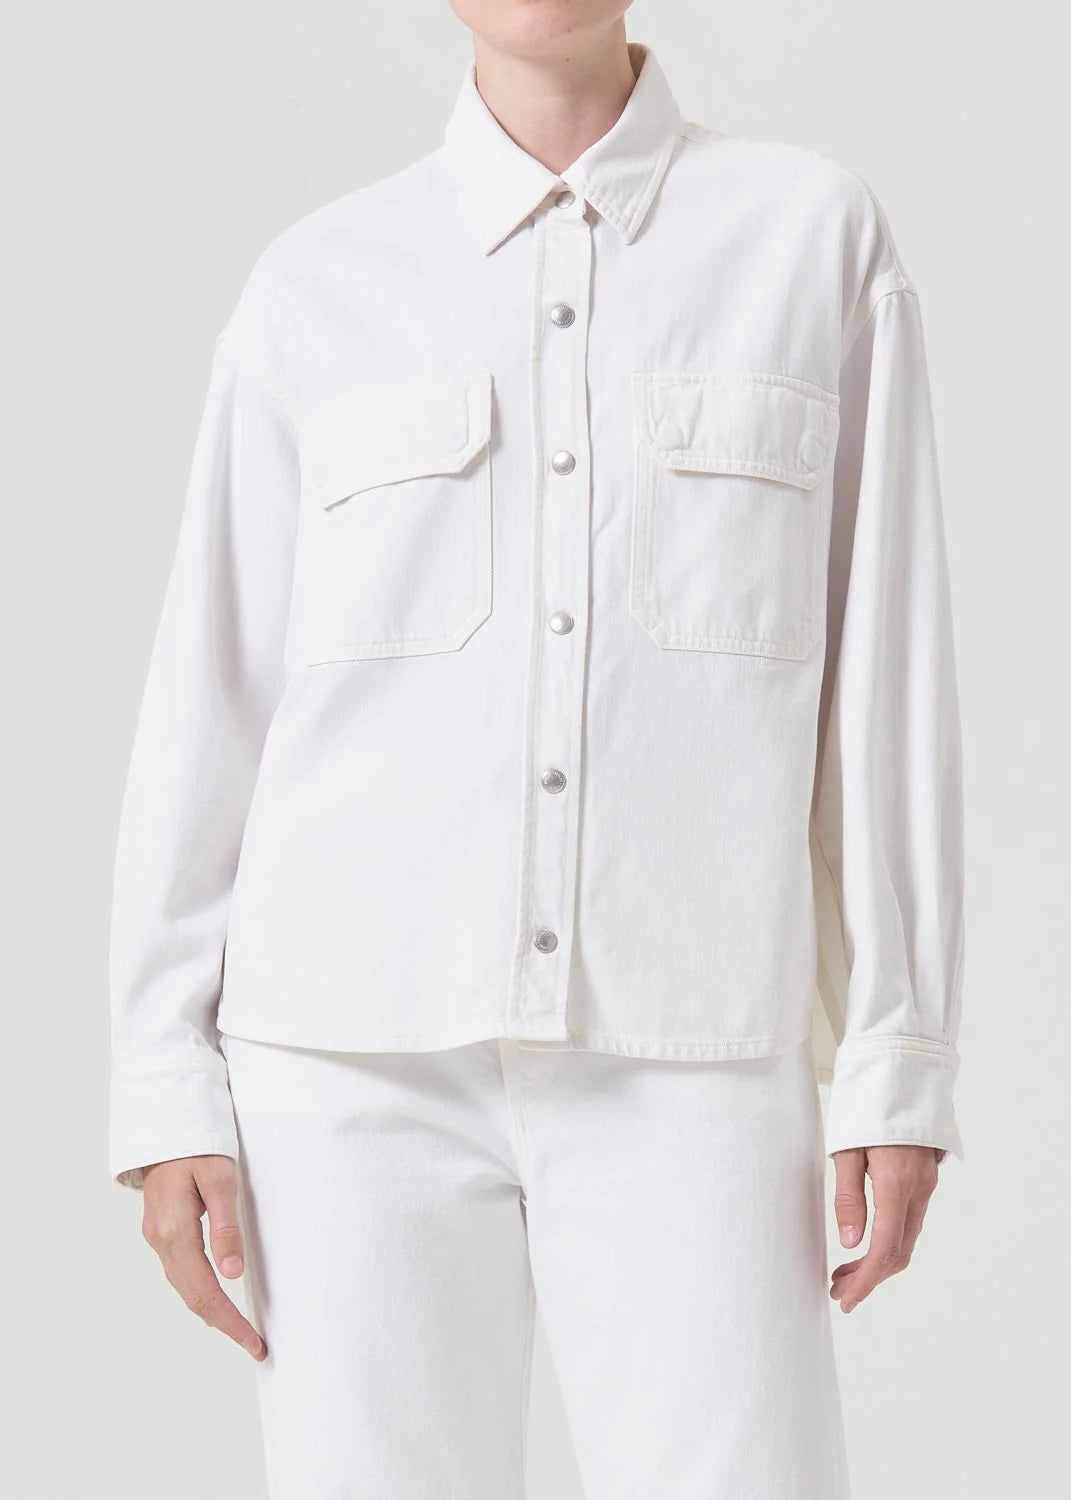 Model wears button down denim shirt in off white wash